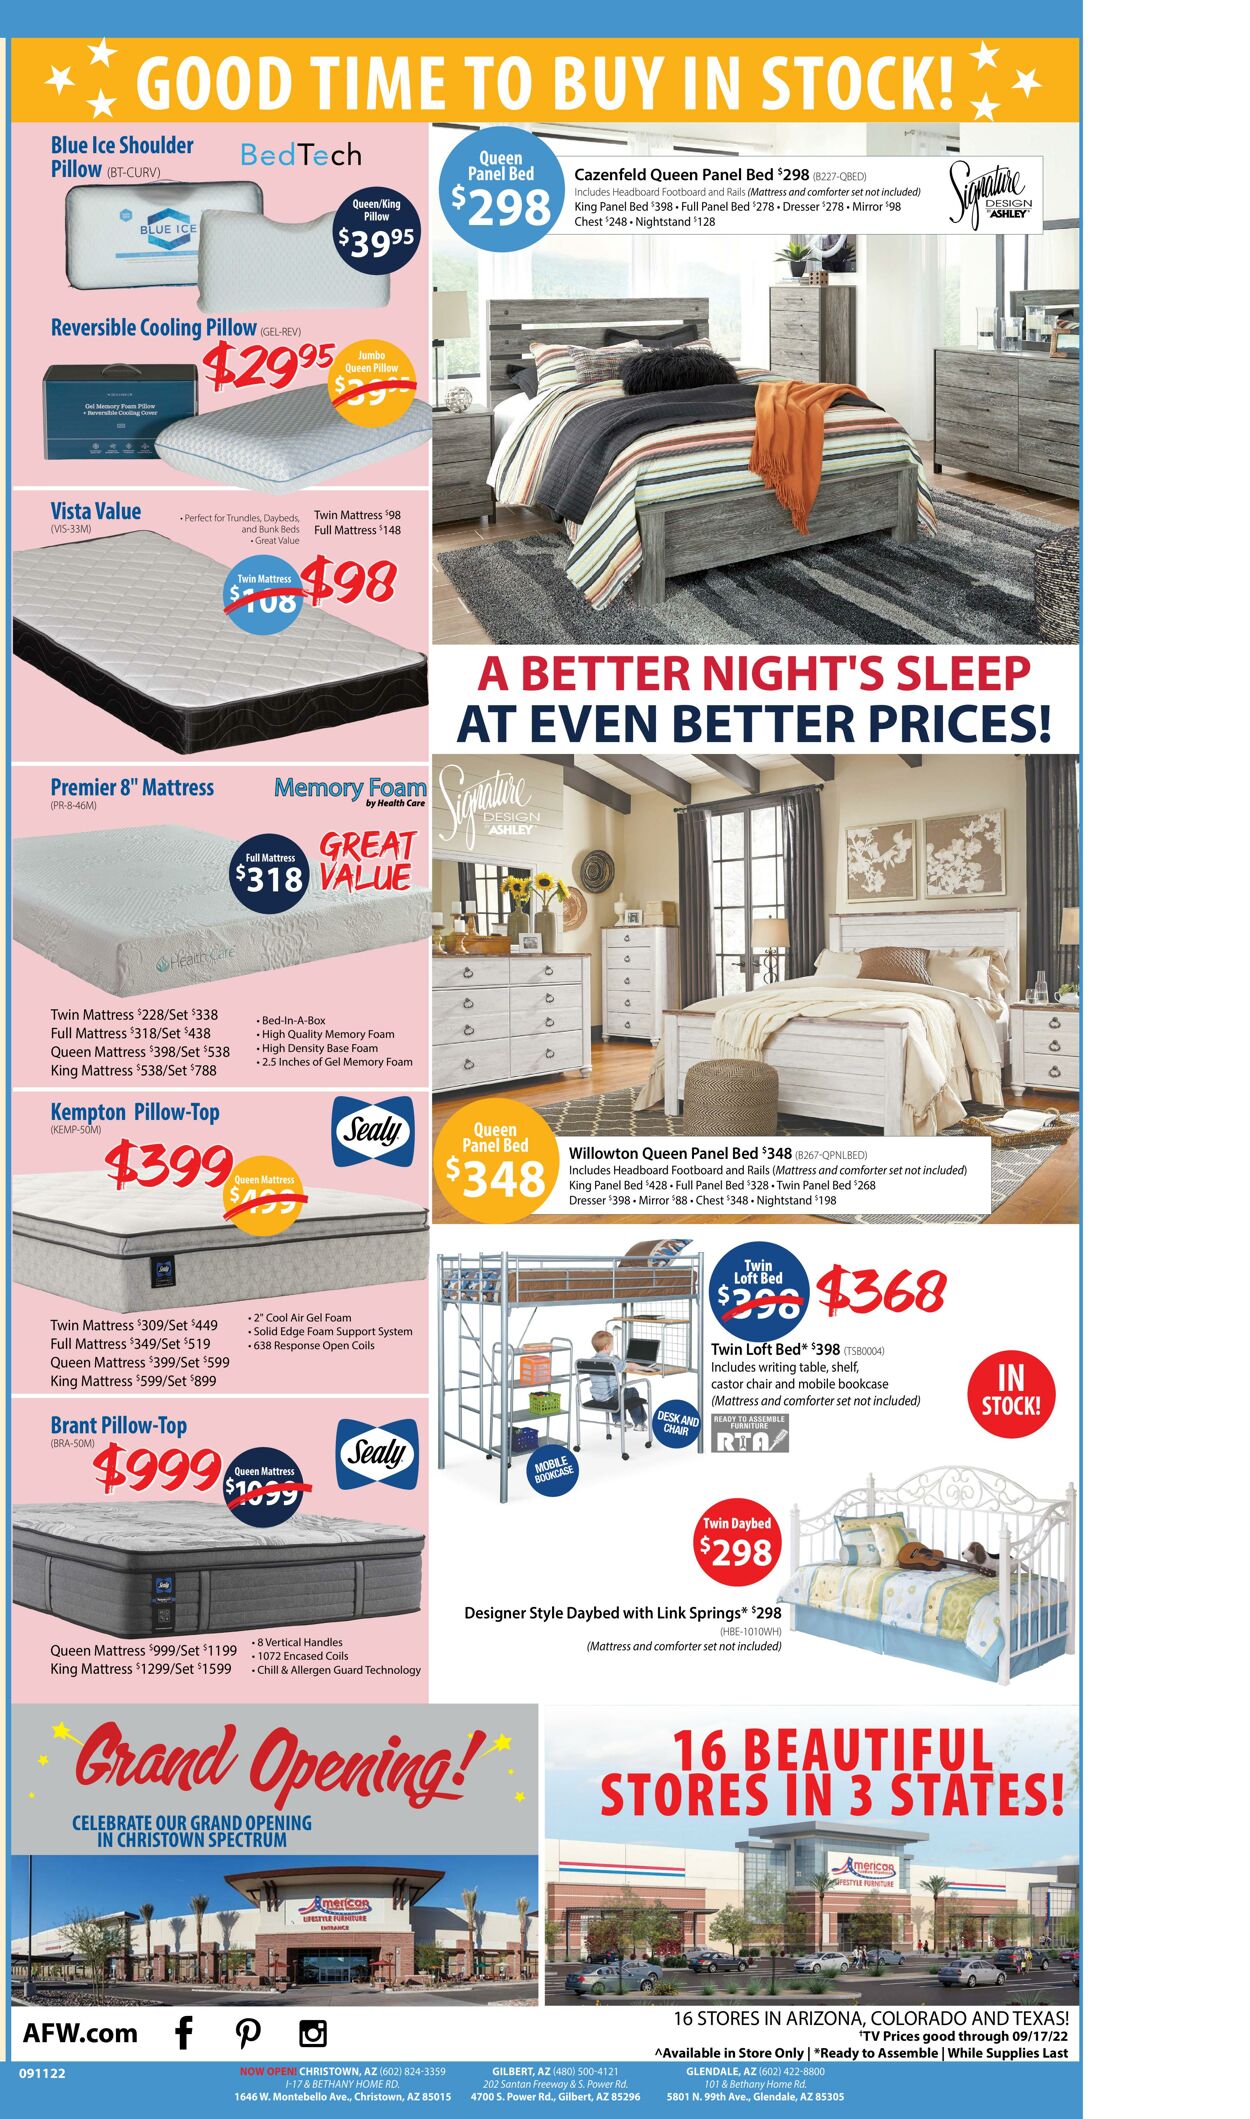 Weekly ad American Furniture Warehouse 09/14/2022 - 10/04/2022